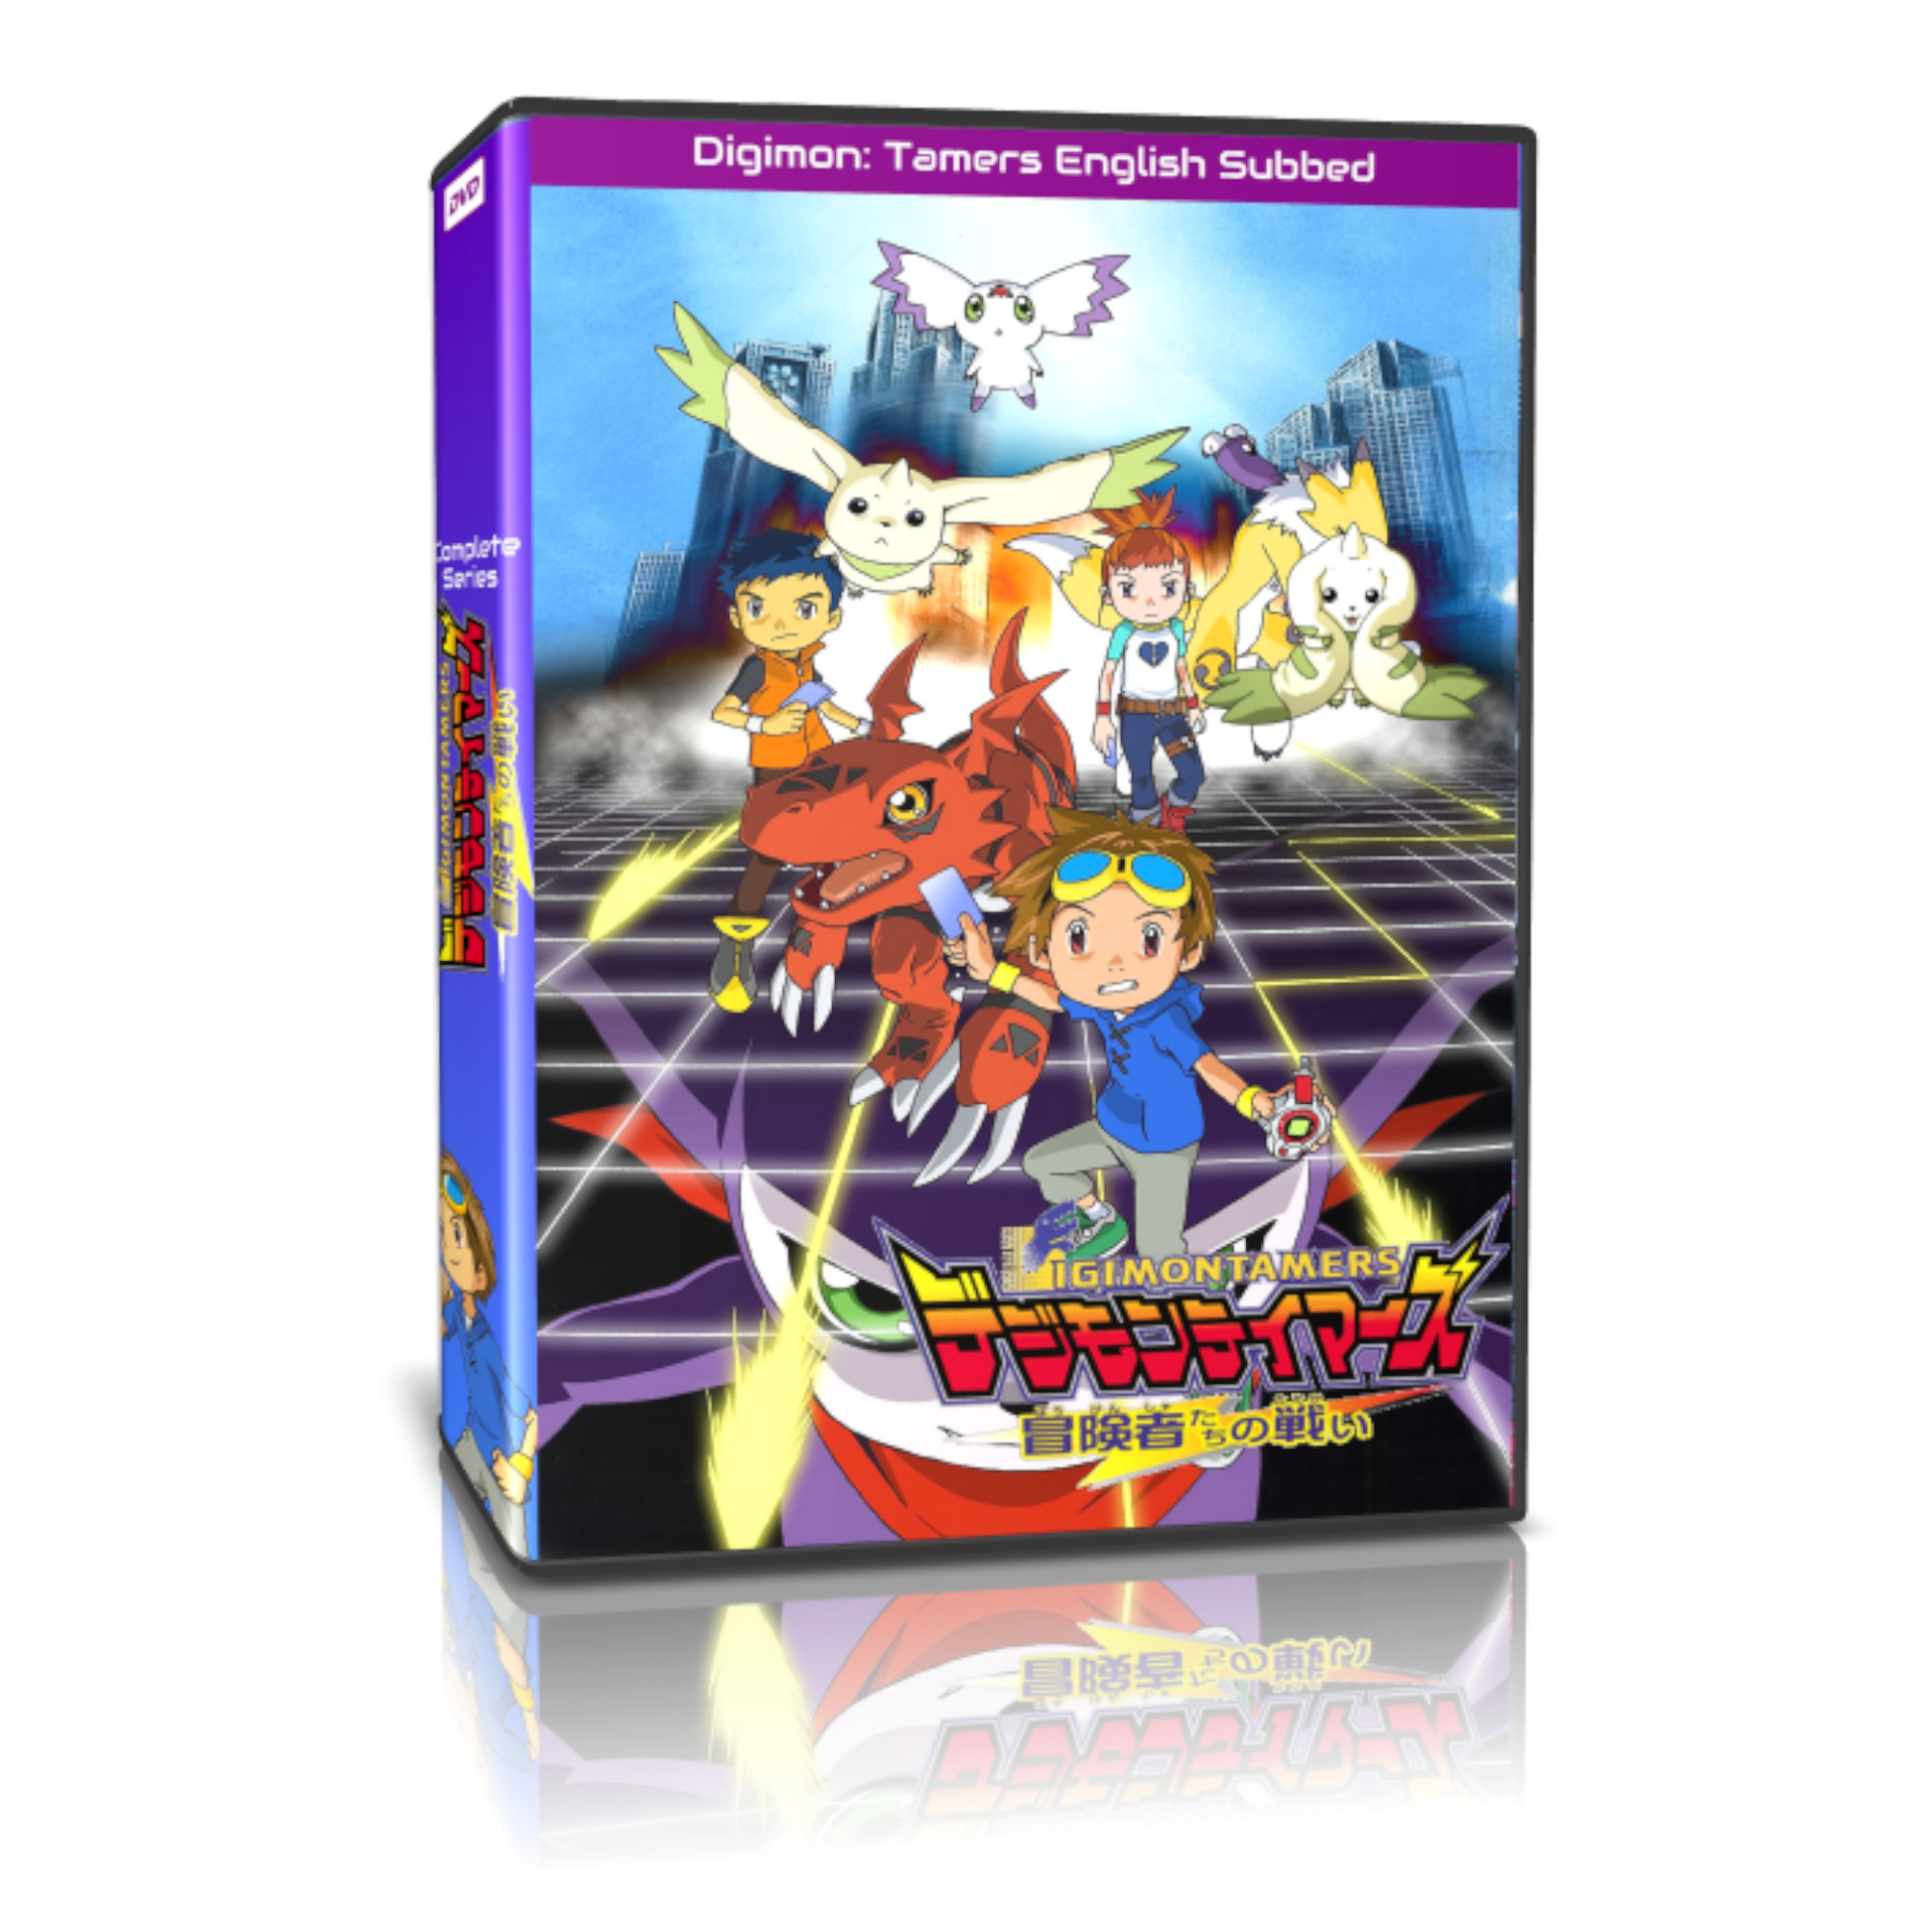 Mermaid Melody Pichi Pichi Pitch + Pure English Subbed DVD Set –  RetroAnimation